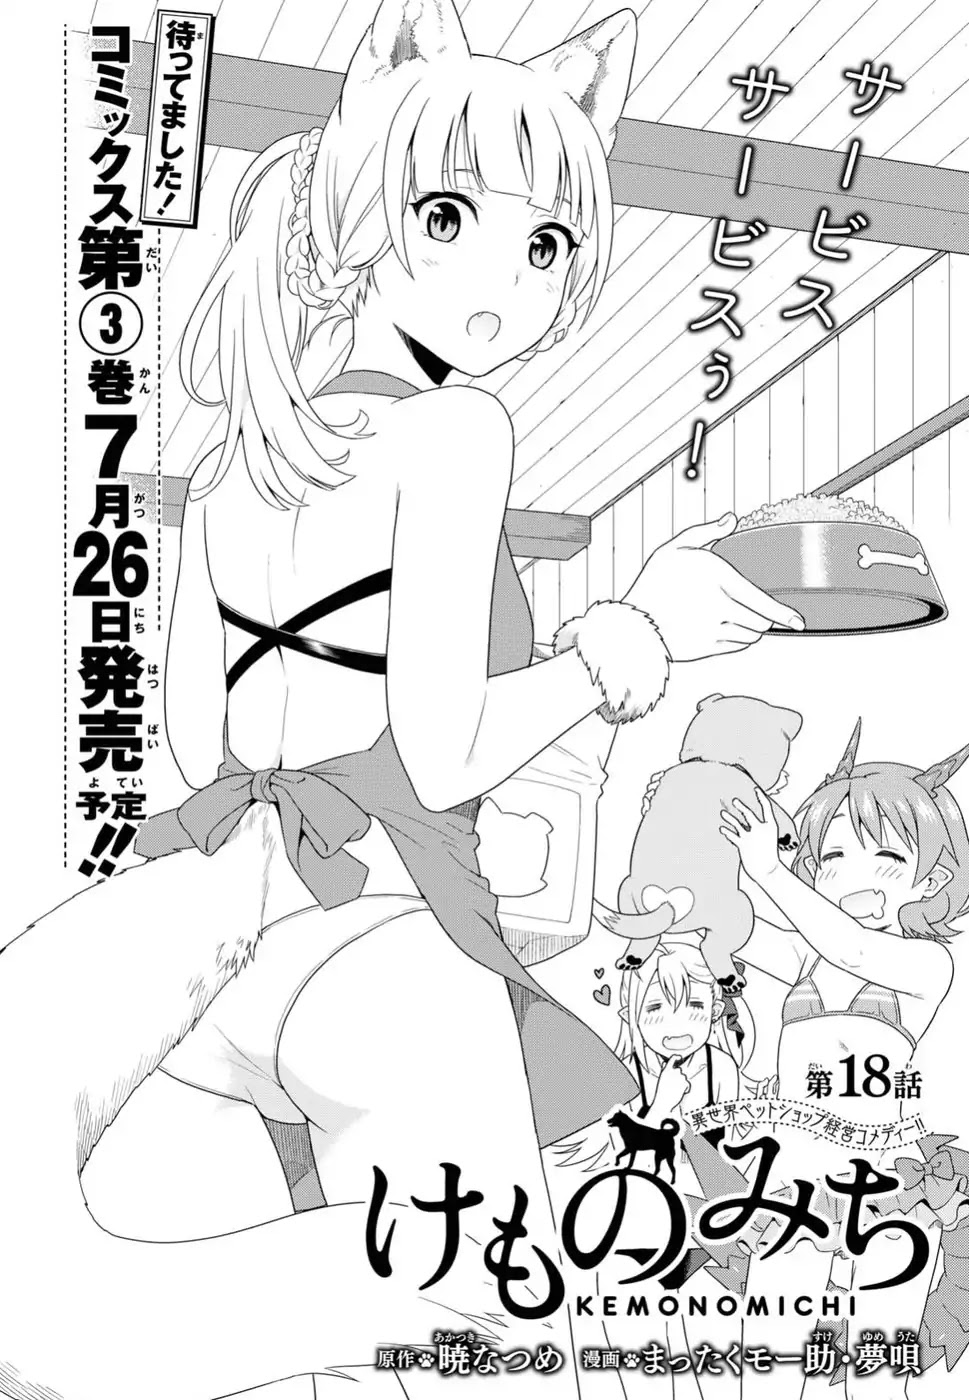 Kemono Michi (Natsume Akatsuki) Vol.3 Chapter 14 - Picture 2